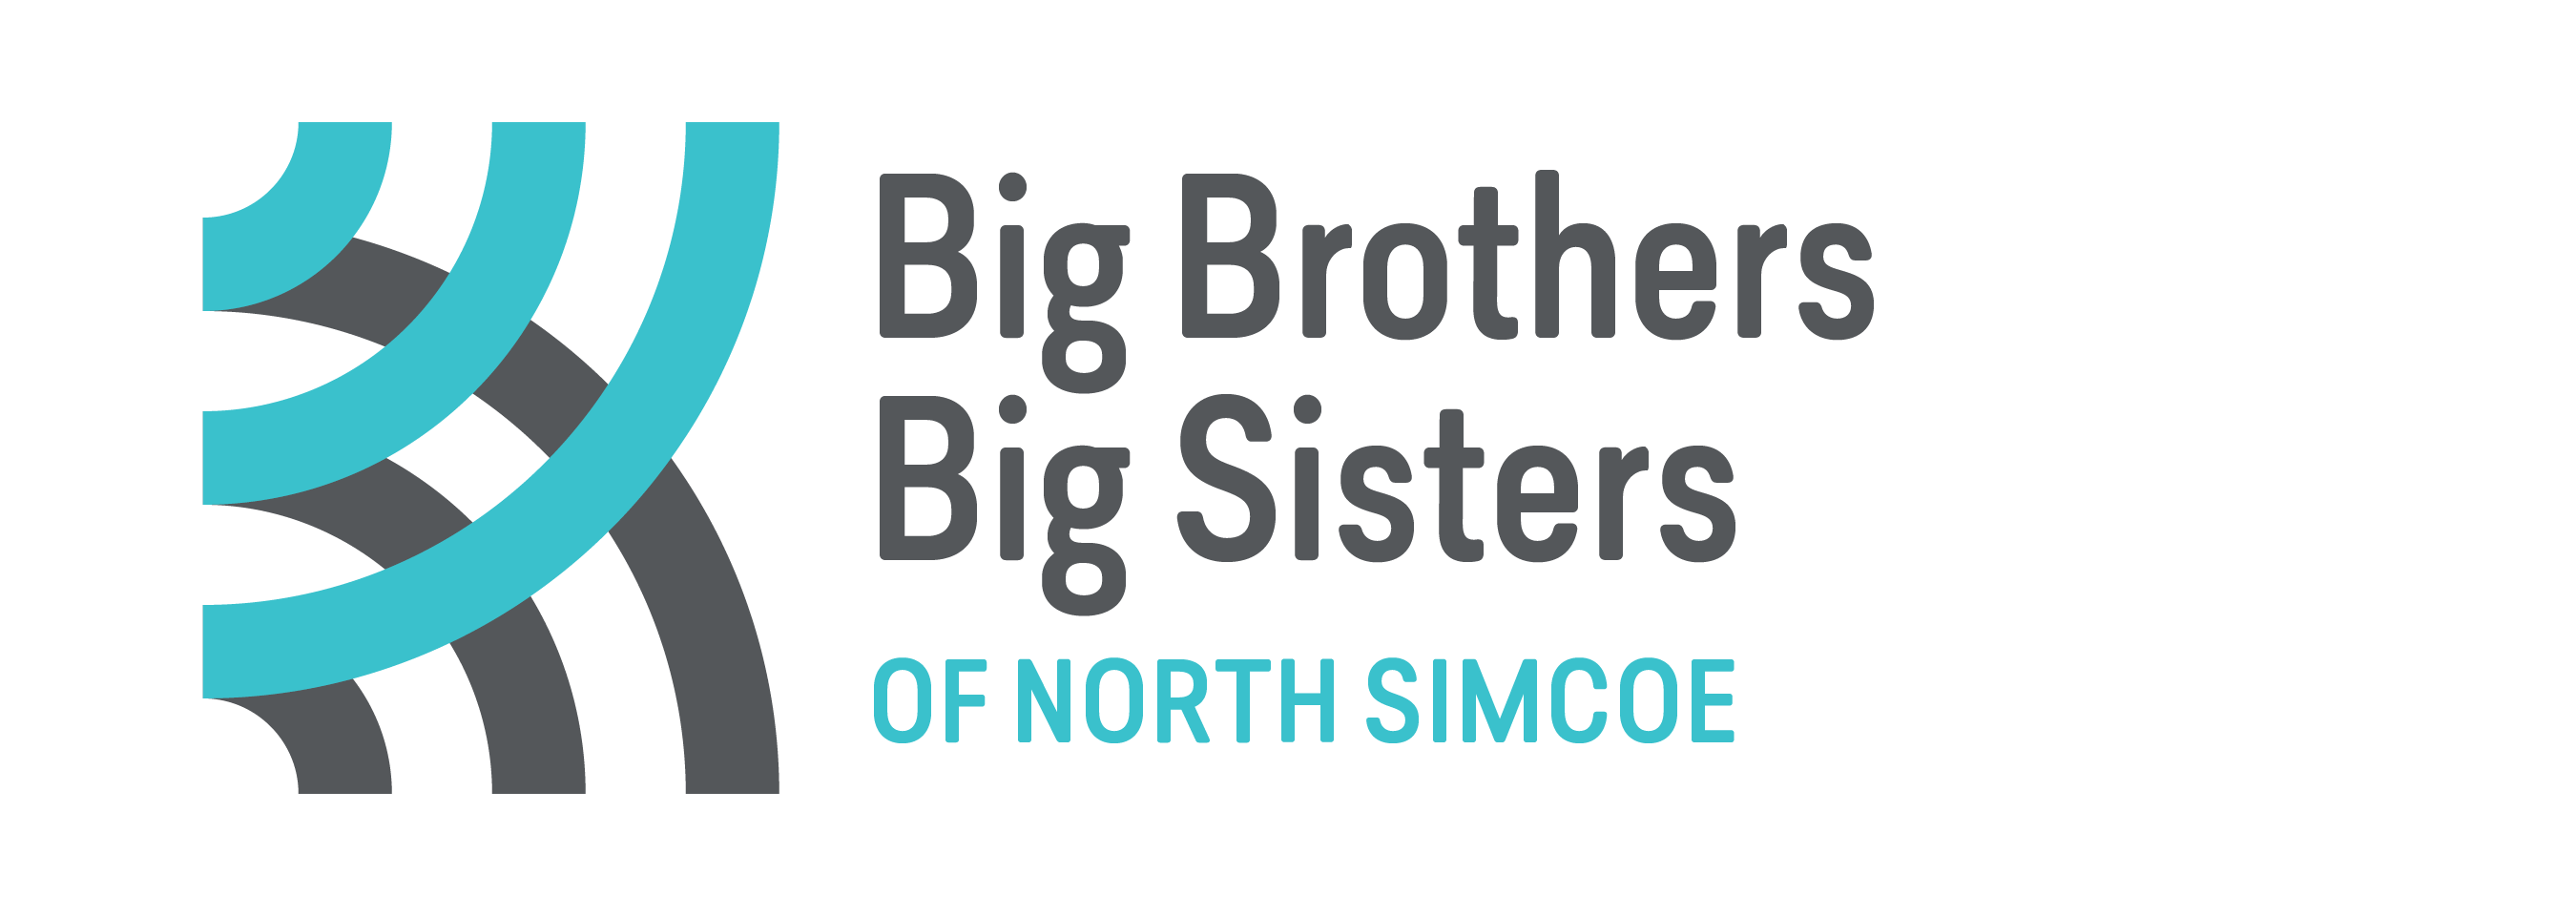 Big Brothers Big Sisters of North Simcoe logo